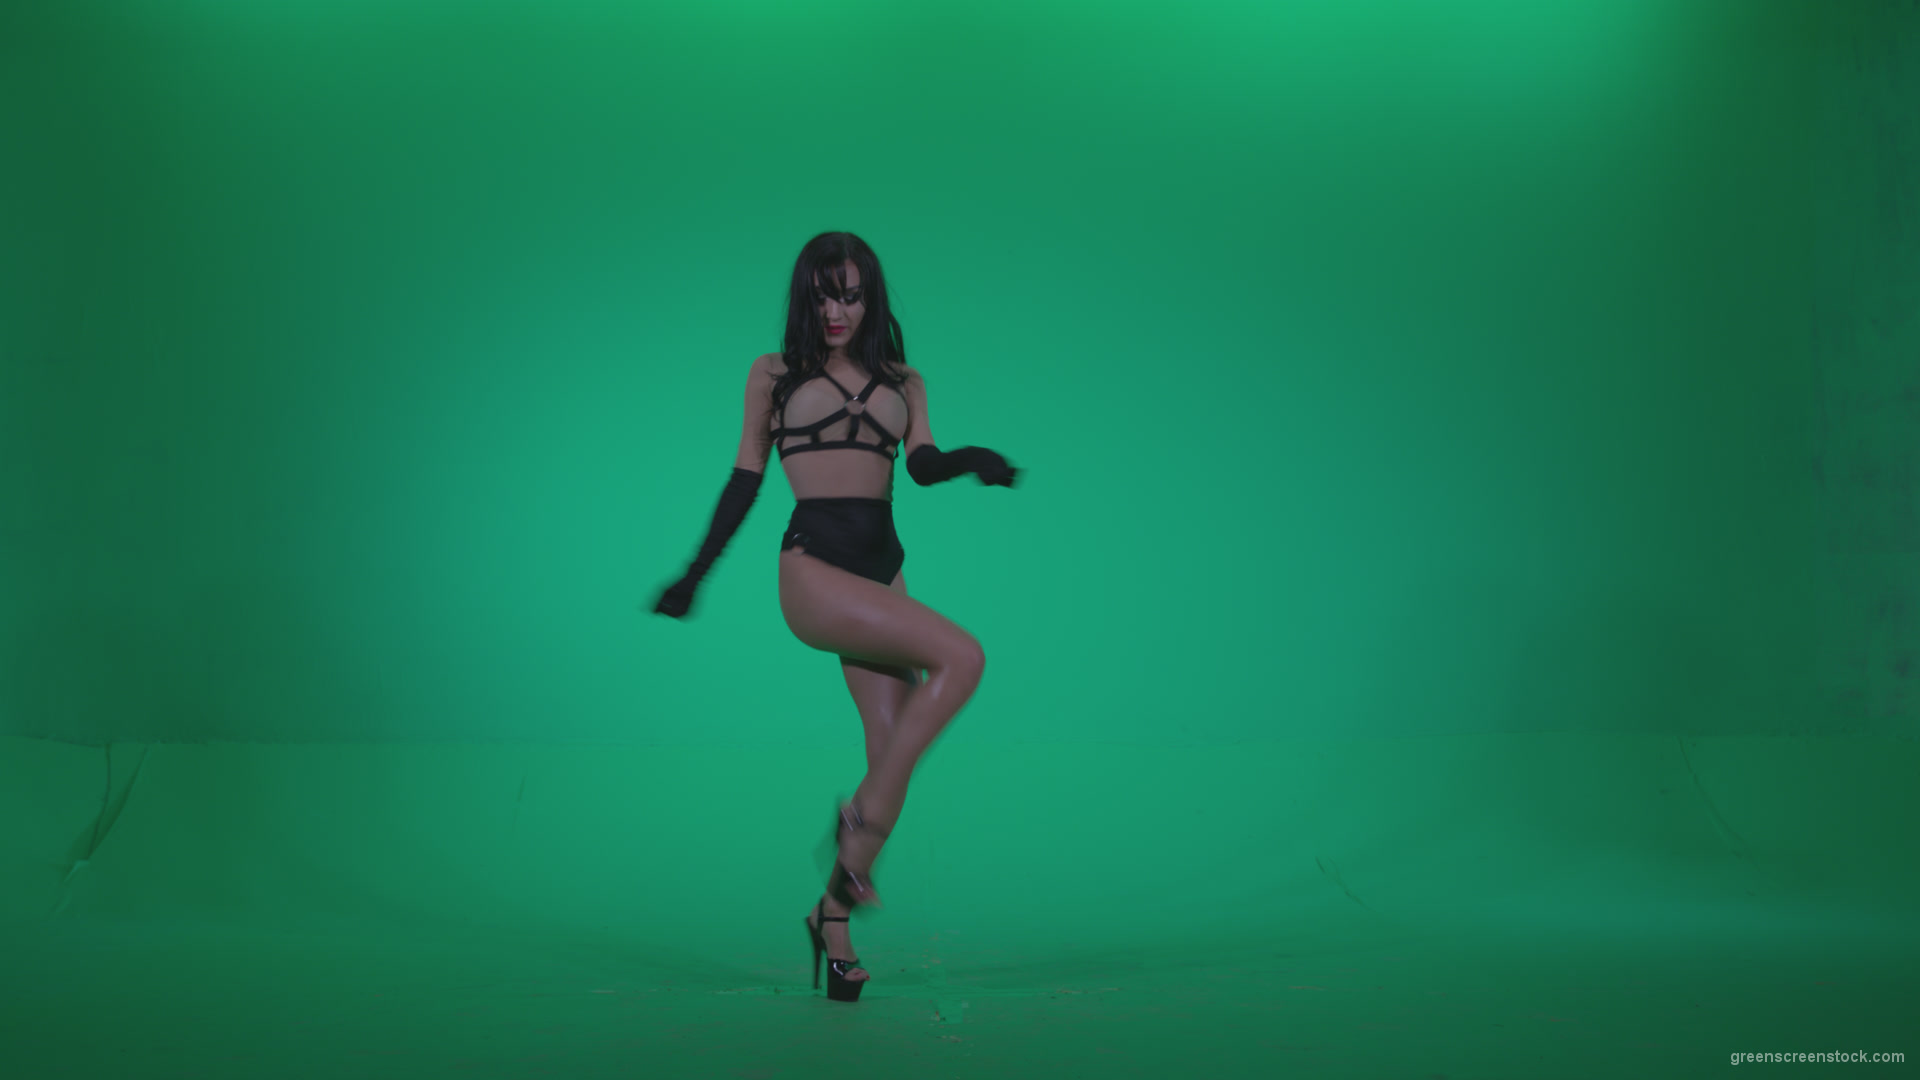 Go-go-Dancer-Black-Magic-y6-Green-Screen-Video-Footage_005 Green Screen Stock